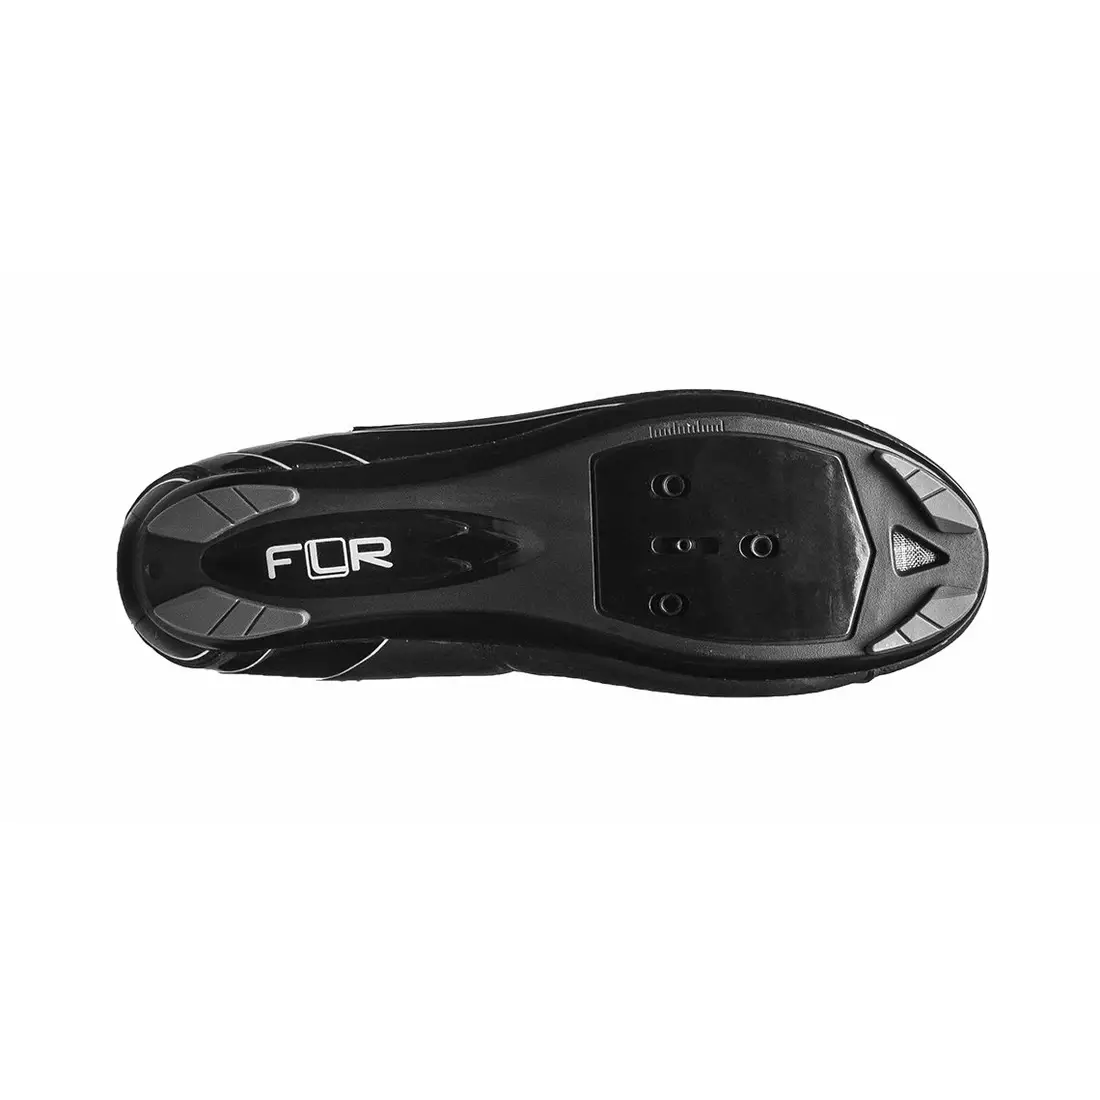 FLR F-35 bicycle shoes, black